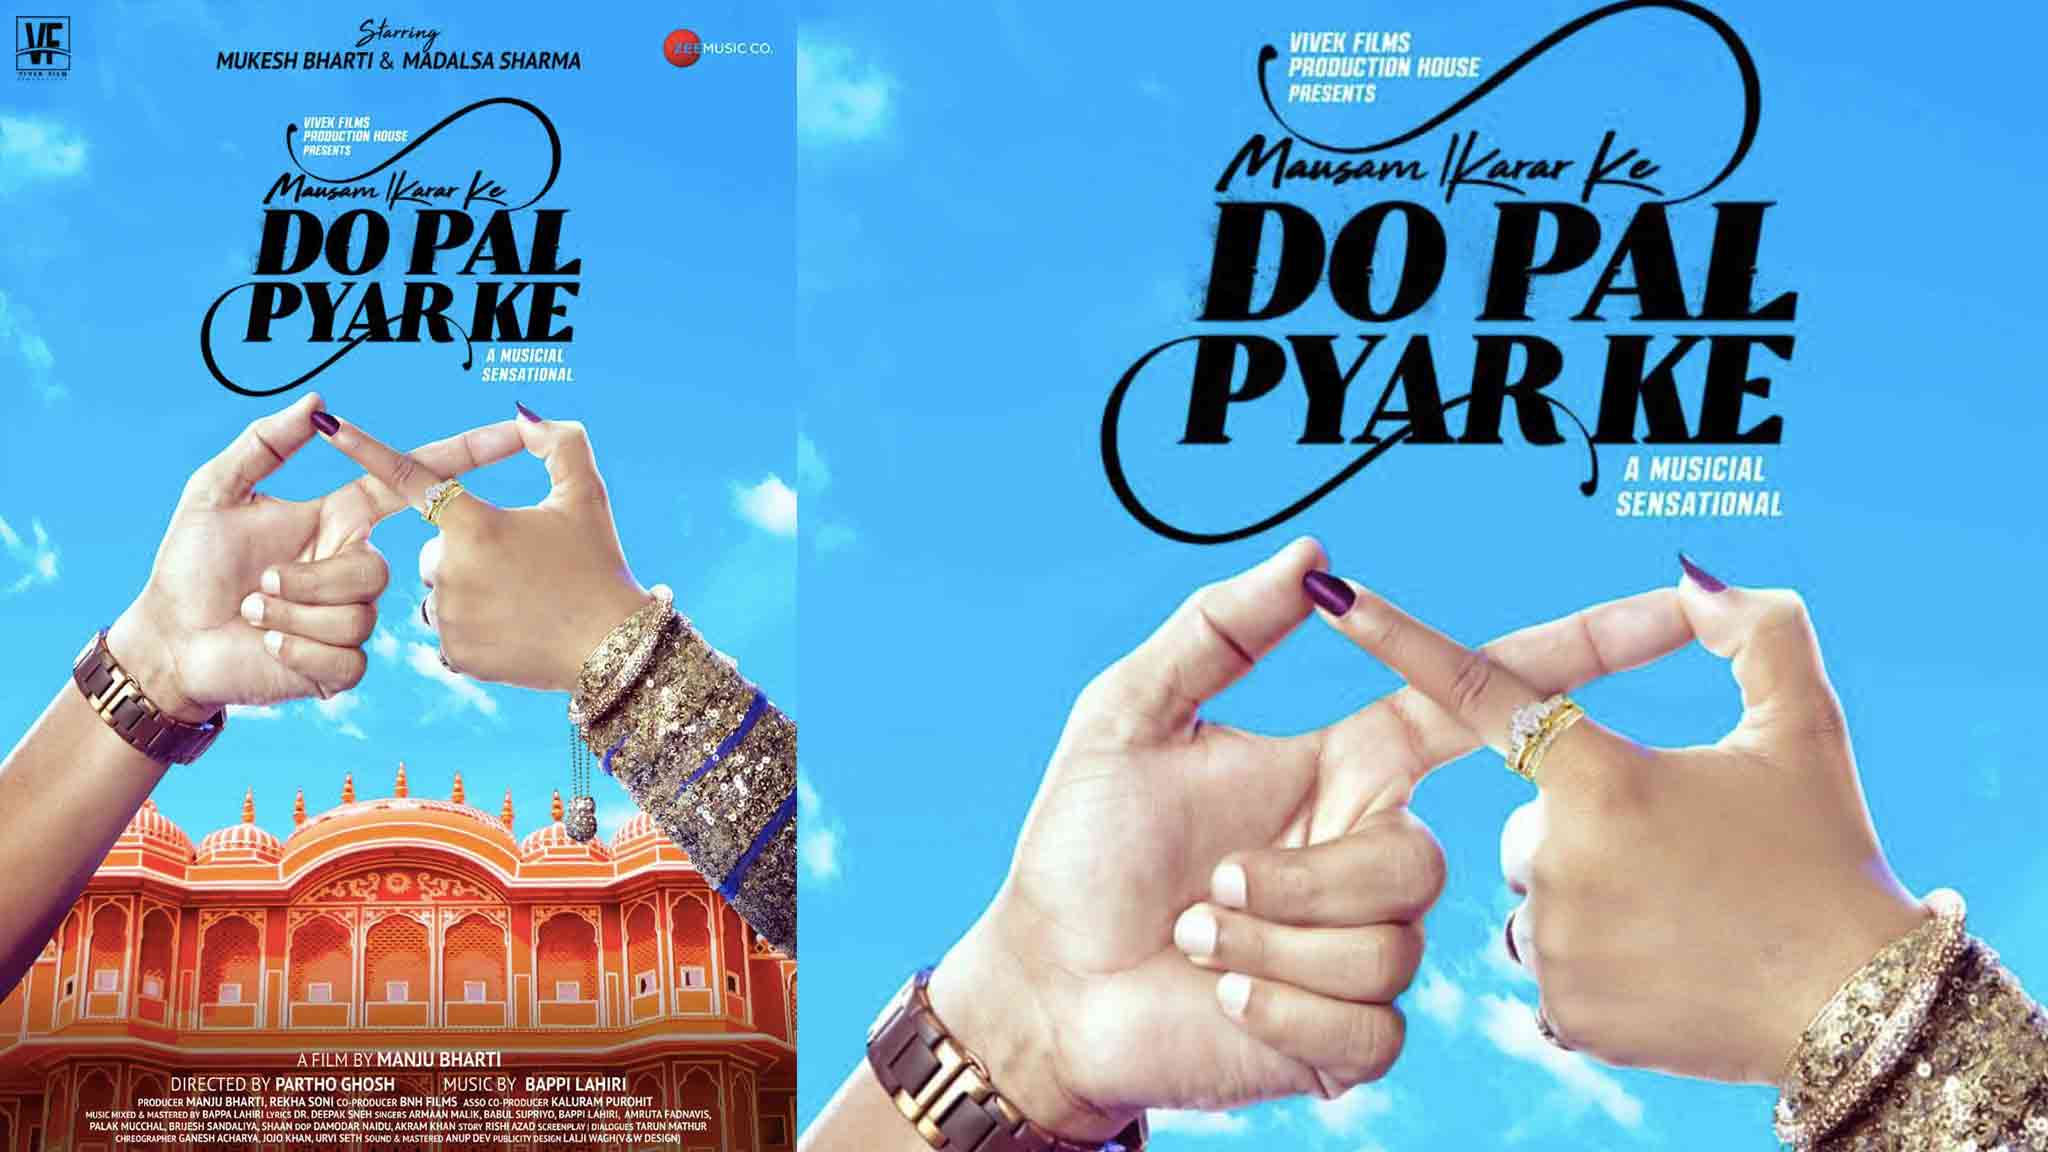 Vivek Films Production House Presents A Glimpse Of Their Next Mausam Ikrar Ke, Do Pal Pyar Ke